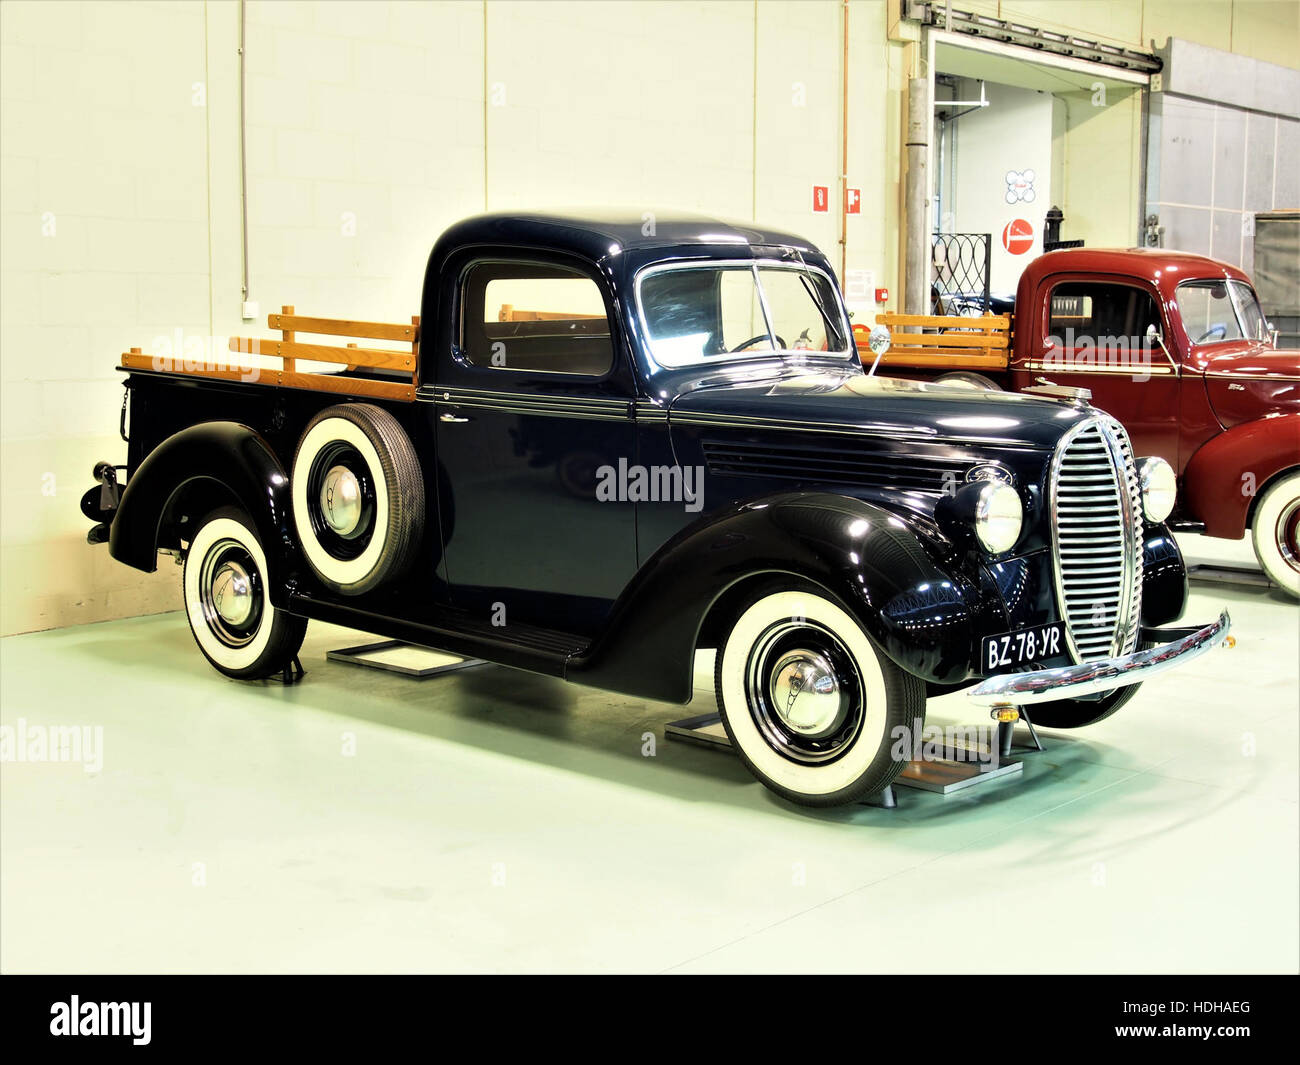 1938 ford 830 Pickup, 3622cc, 8-Zylinder V, 80hp pic2 Stockfoto